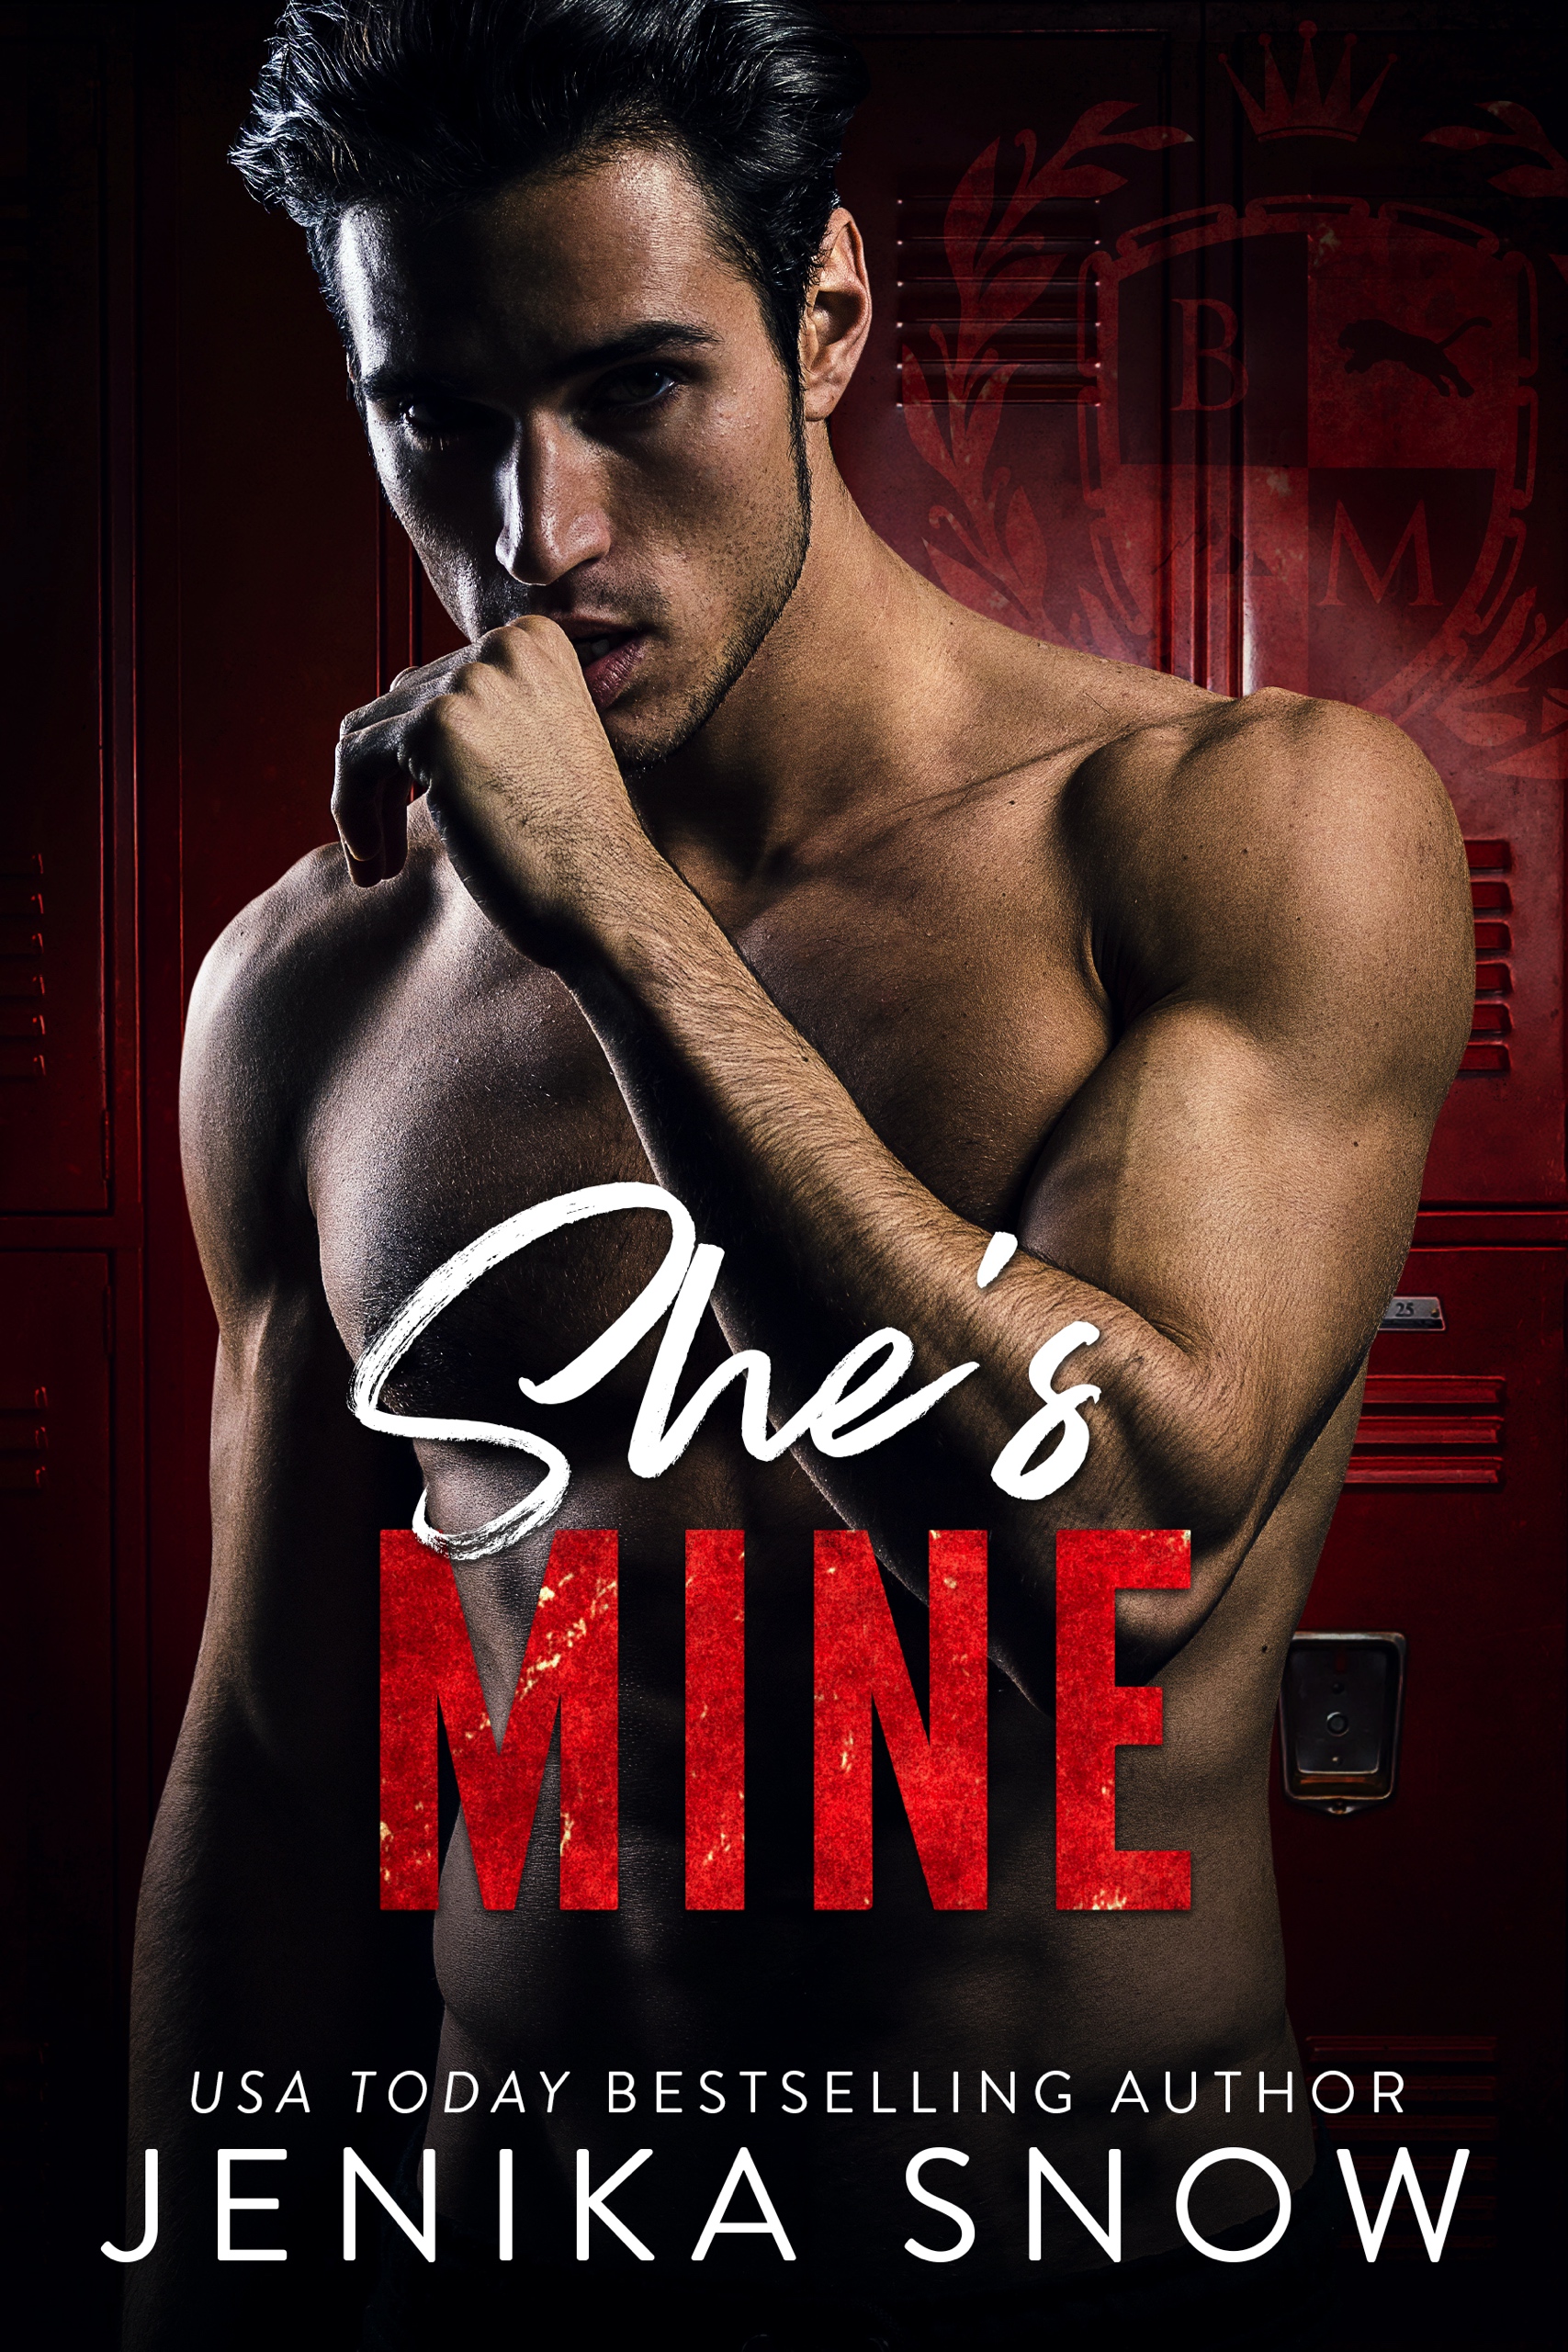 Shes-Mine-Kindle